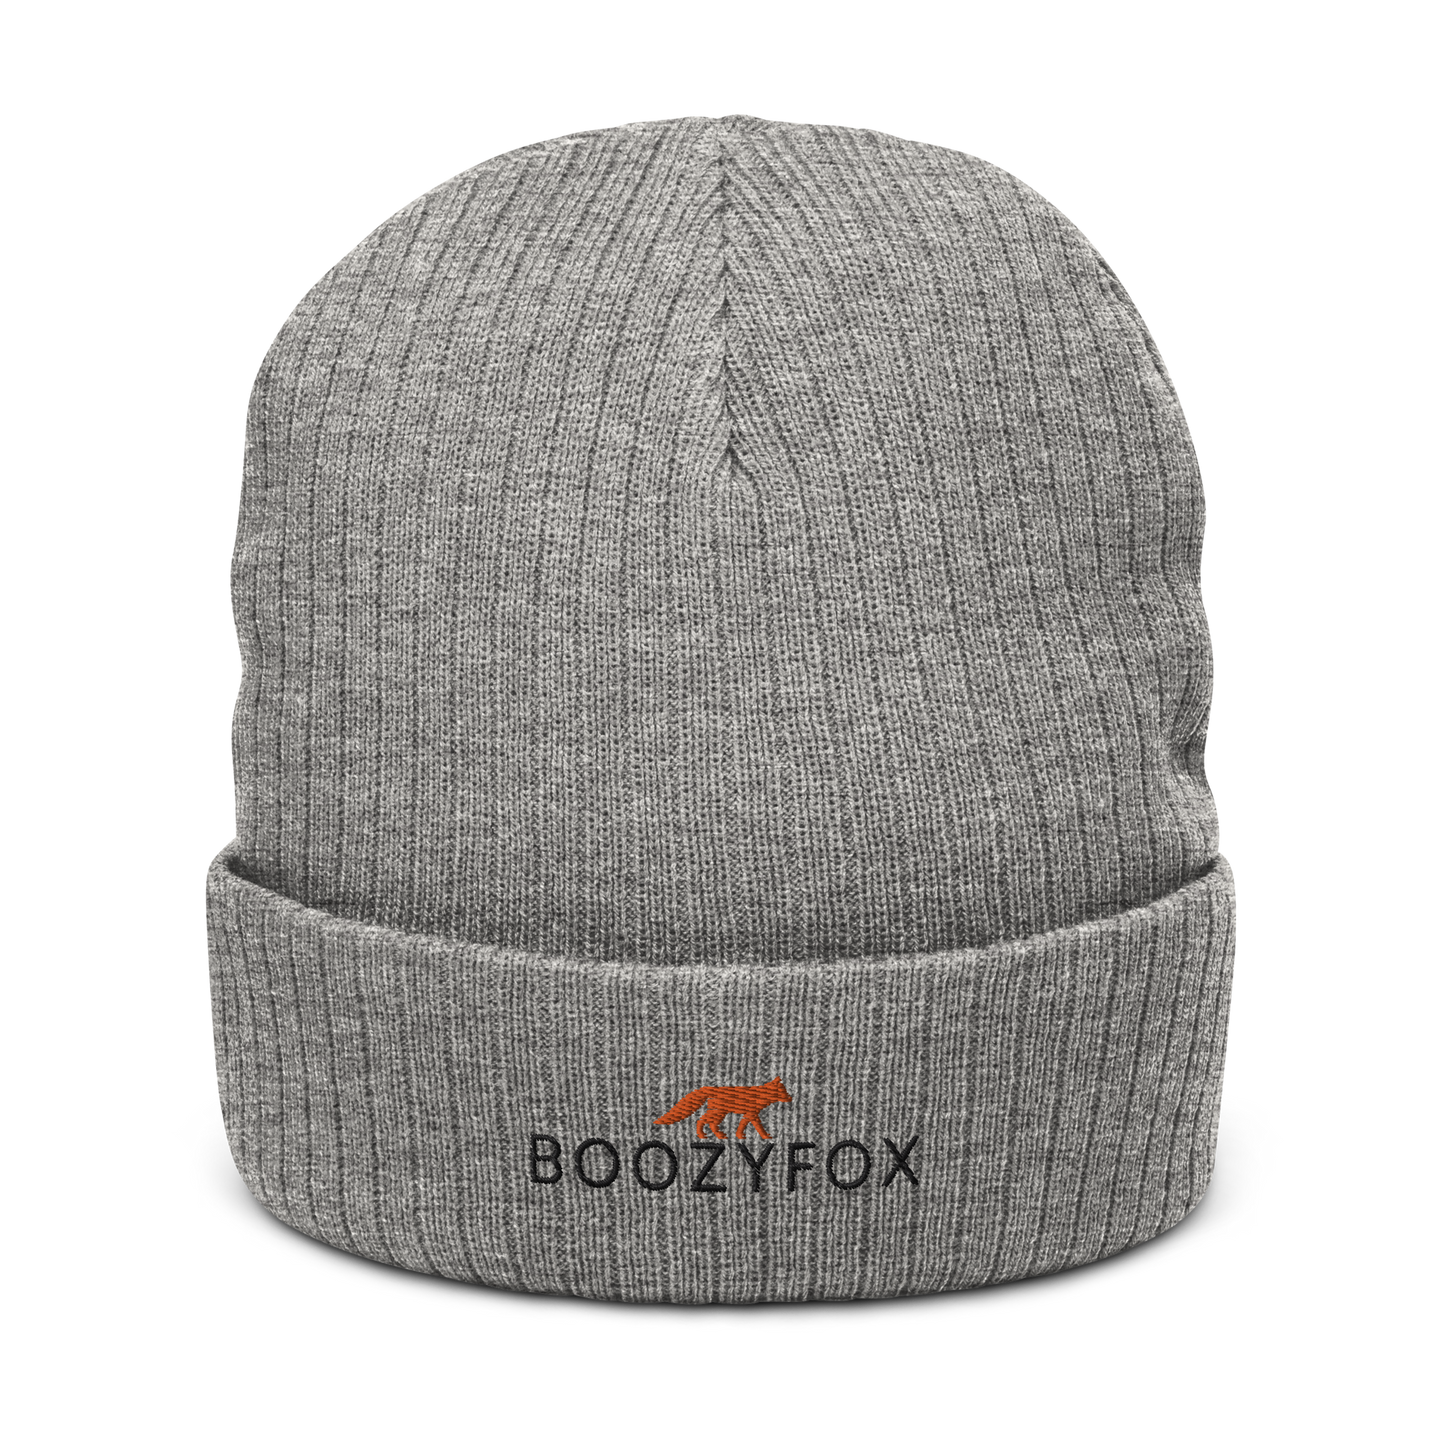 Light Grey Melange Ribbed Knit Beanie With An Embroidered Boozy Fox Logo On Fold - Shop Beanies Online - Boozy Fox